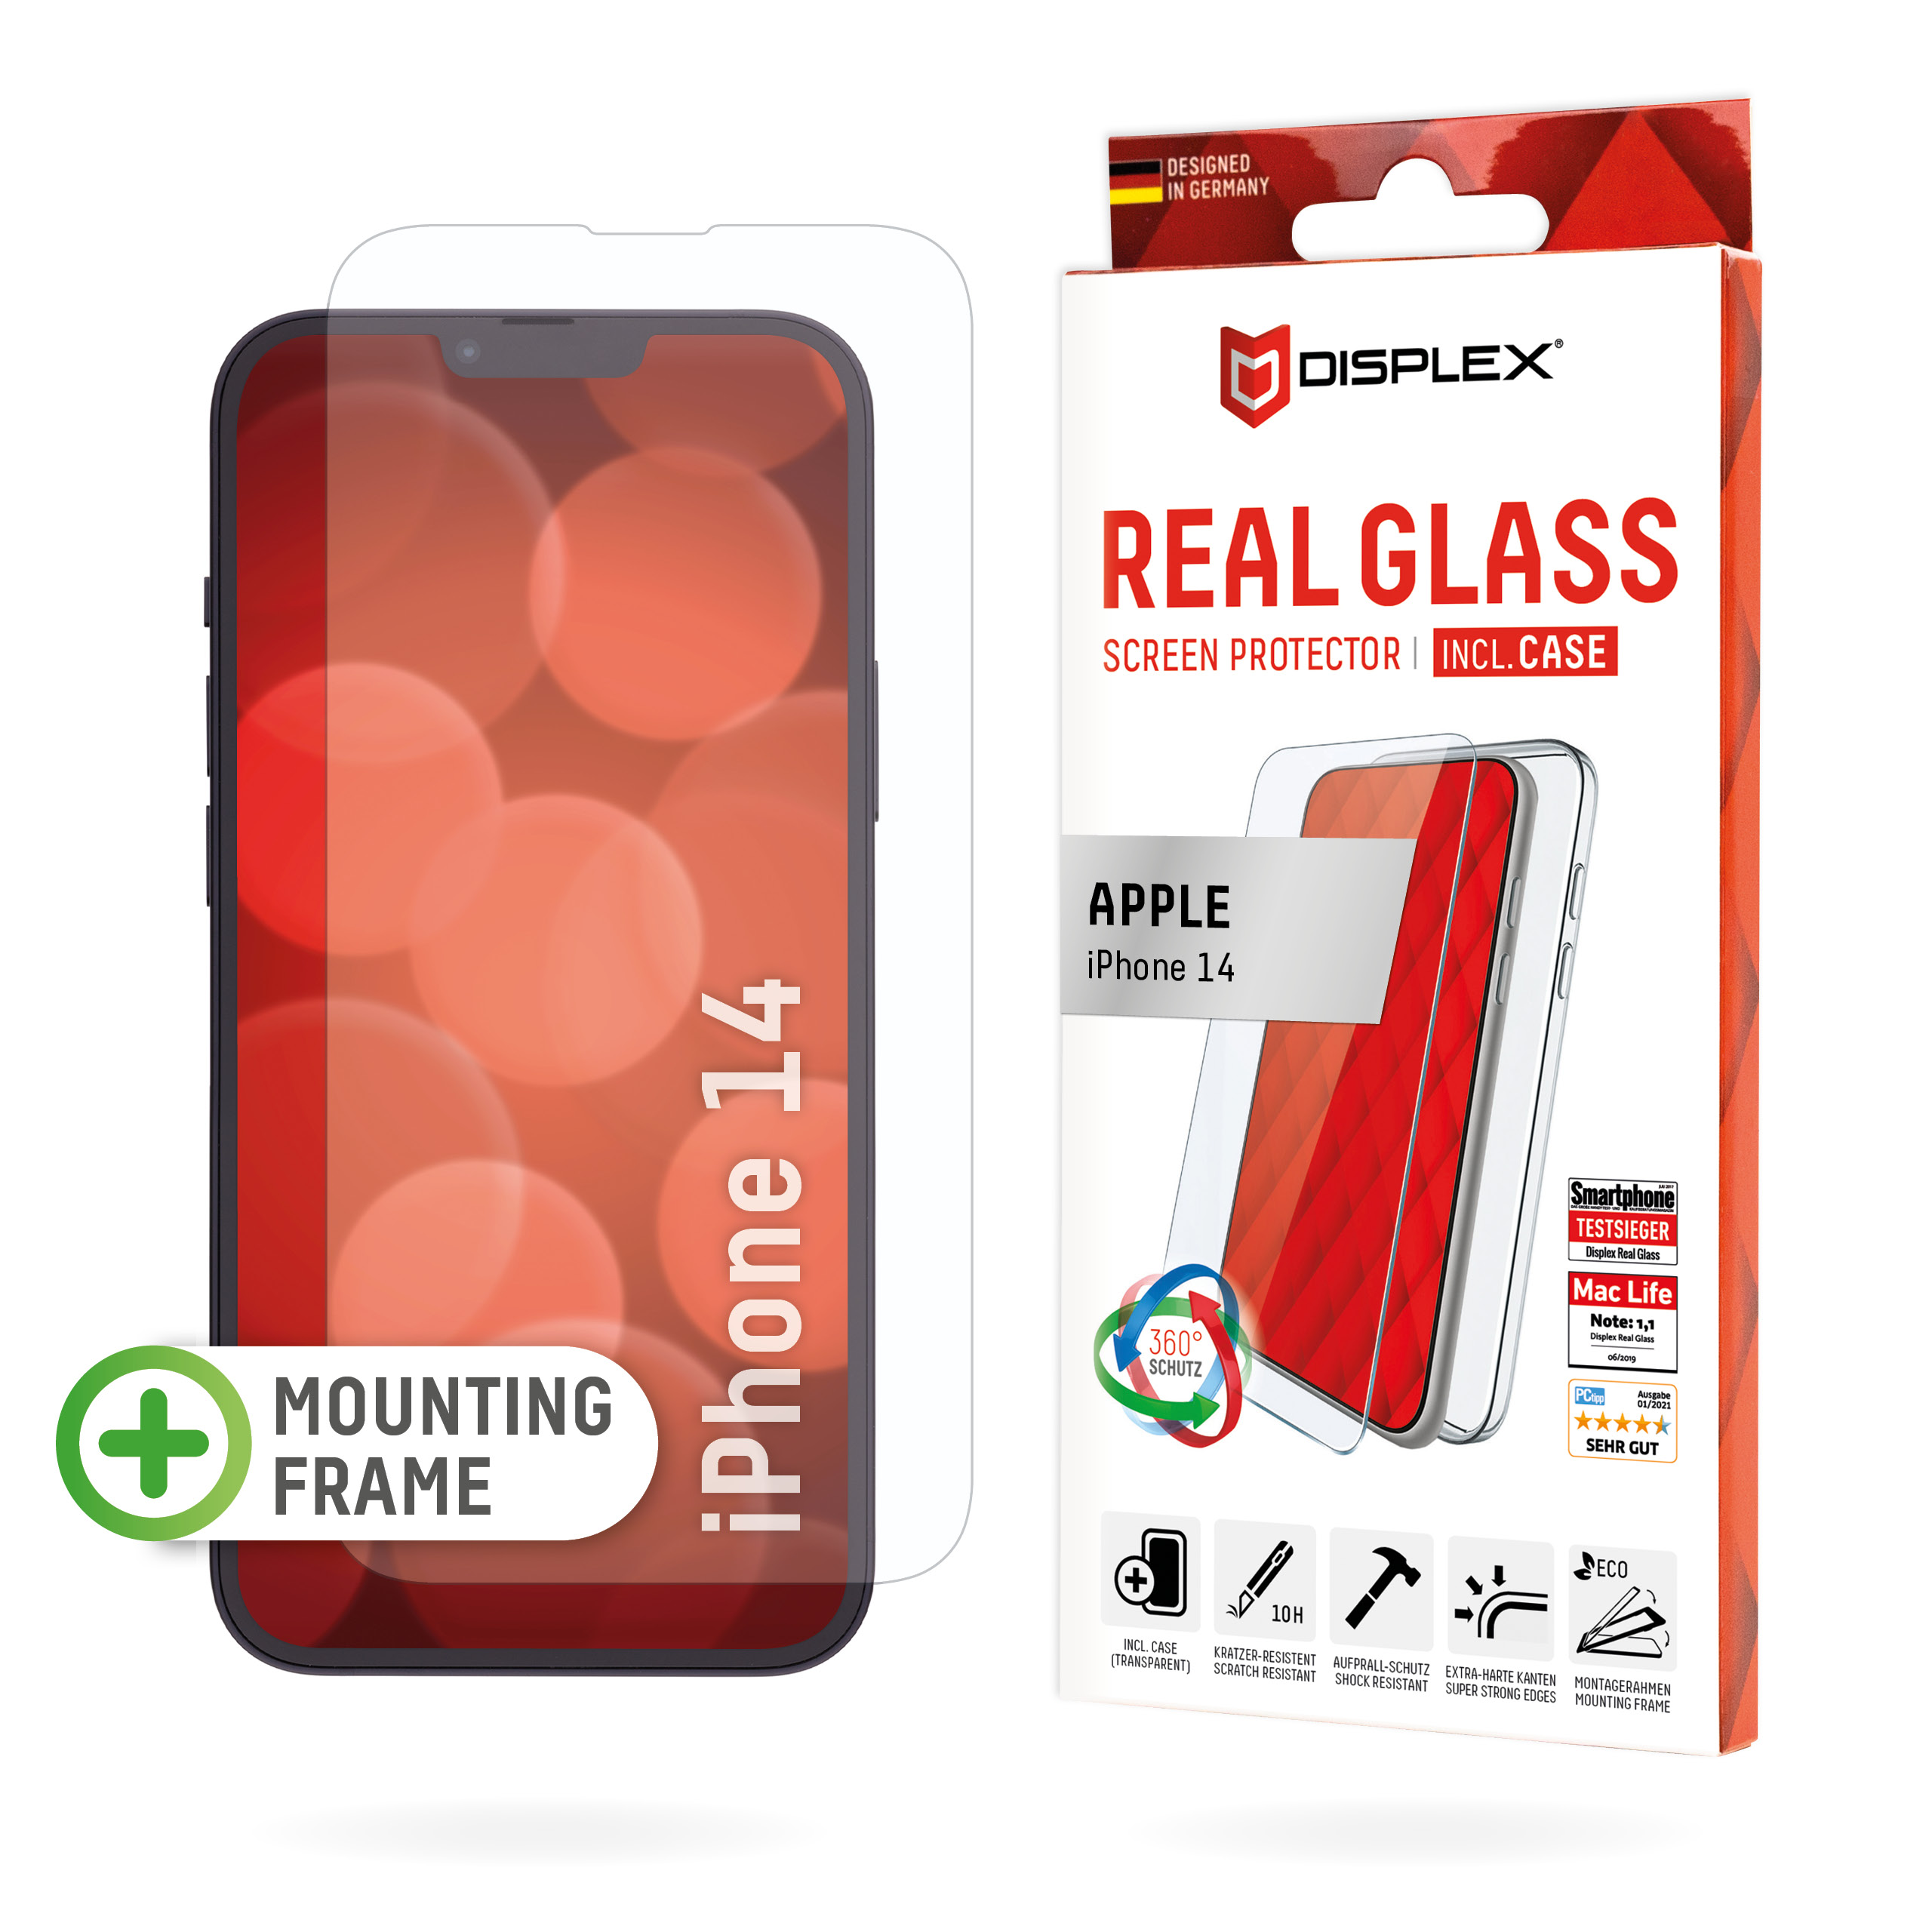 01710-APPLE-iPhone-14-RealGlass-Case-2D-EN